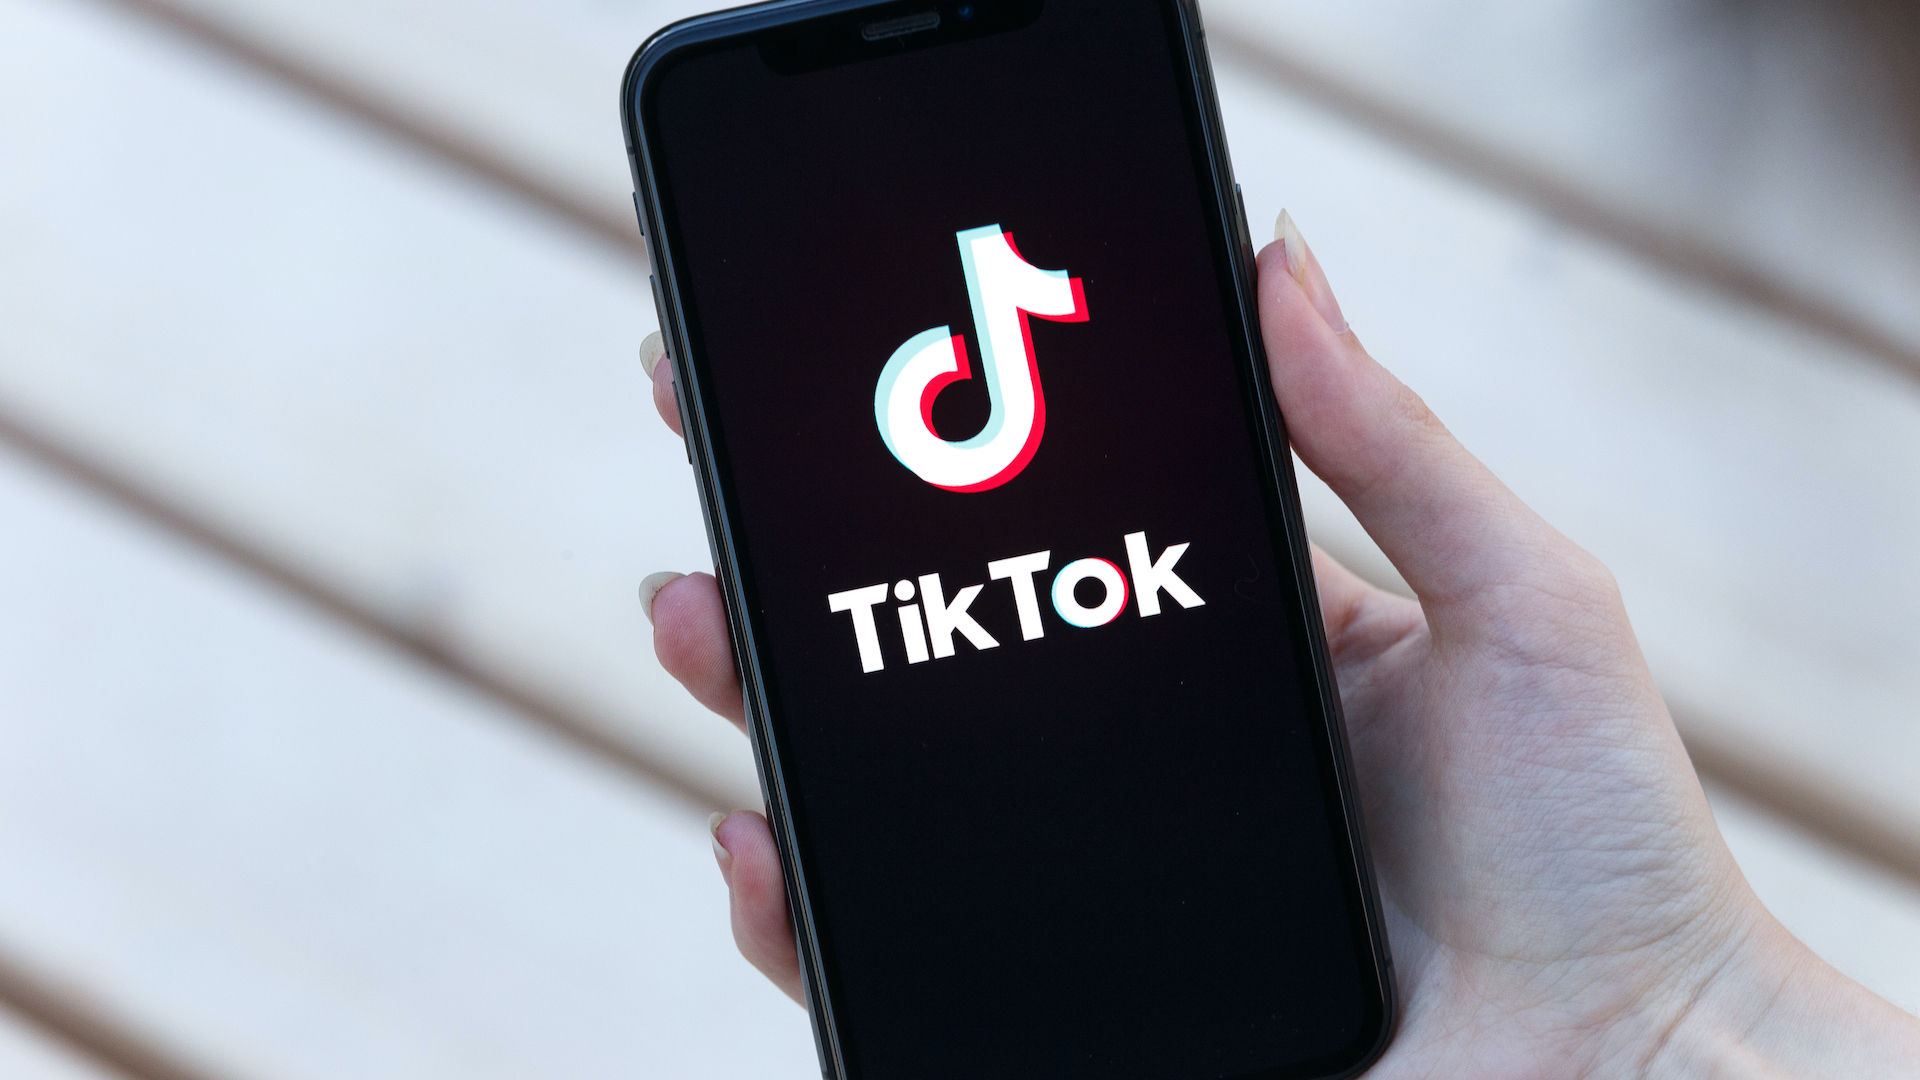 Tik Tok on a mobile phone